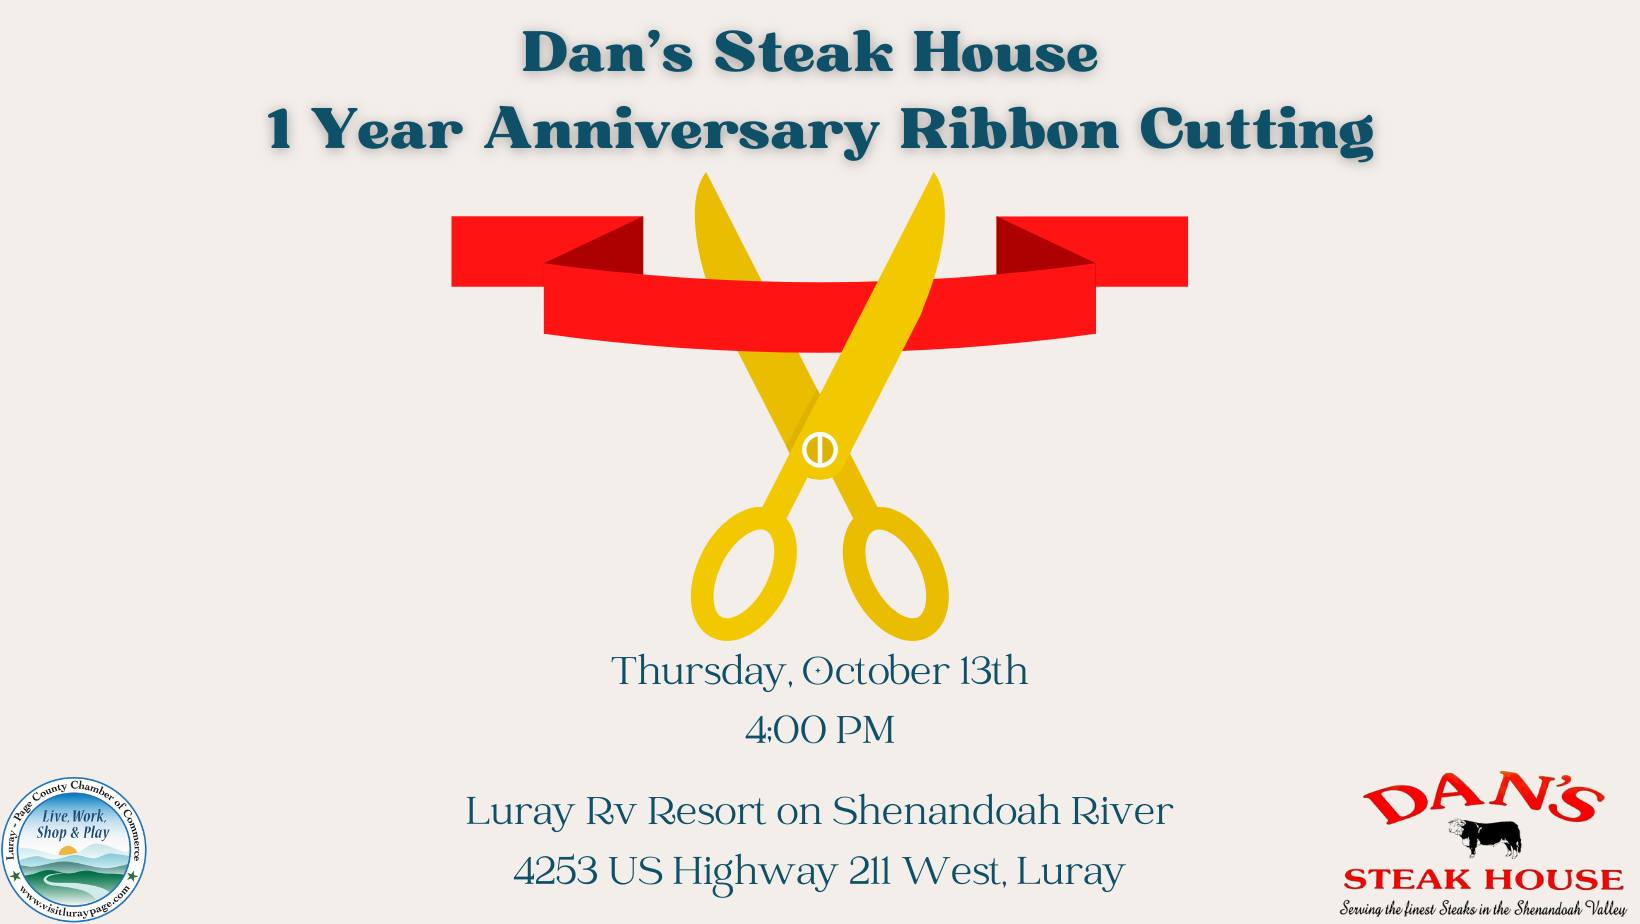 Dan’s Steak House 1 Year Anniversary Ribbon Cutting